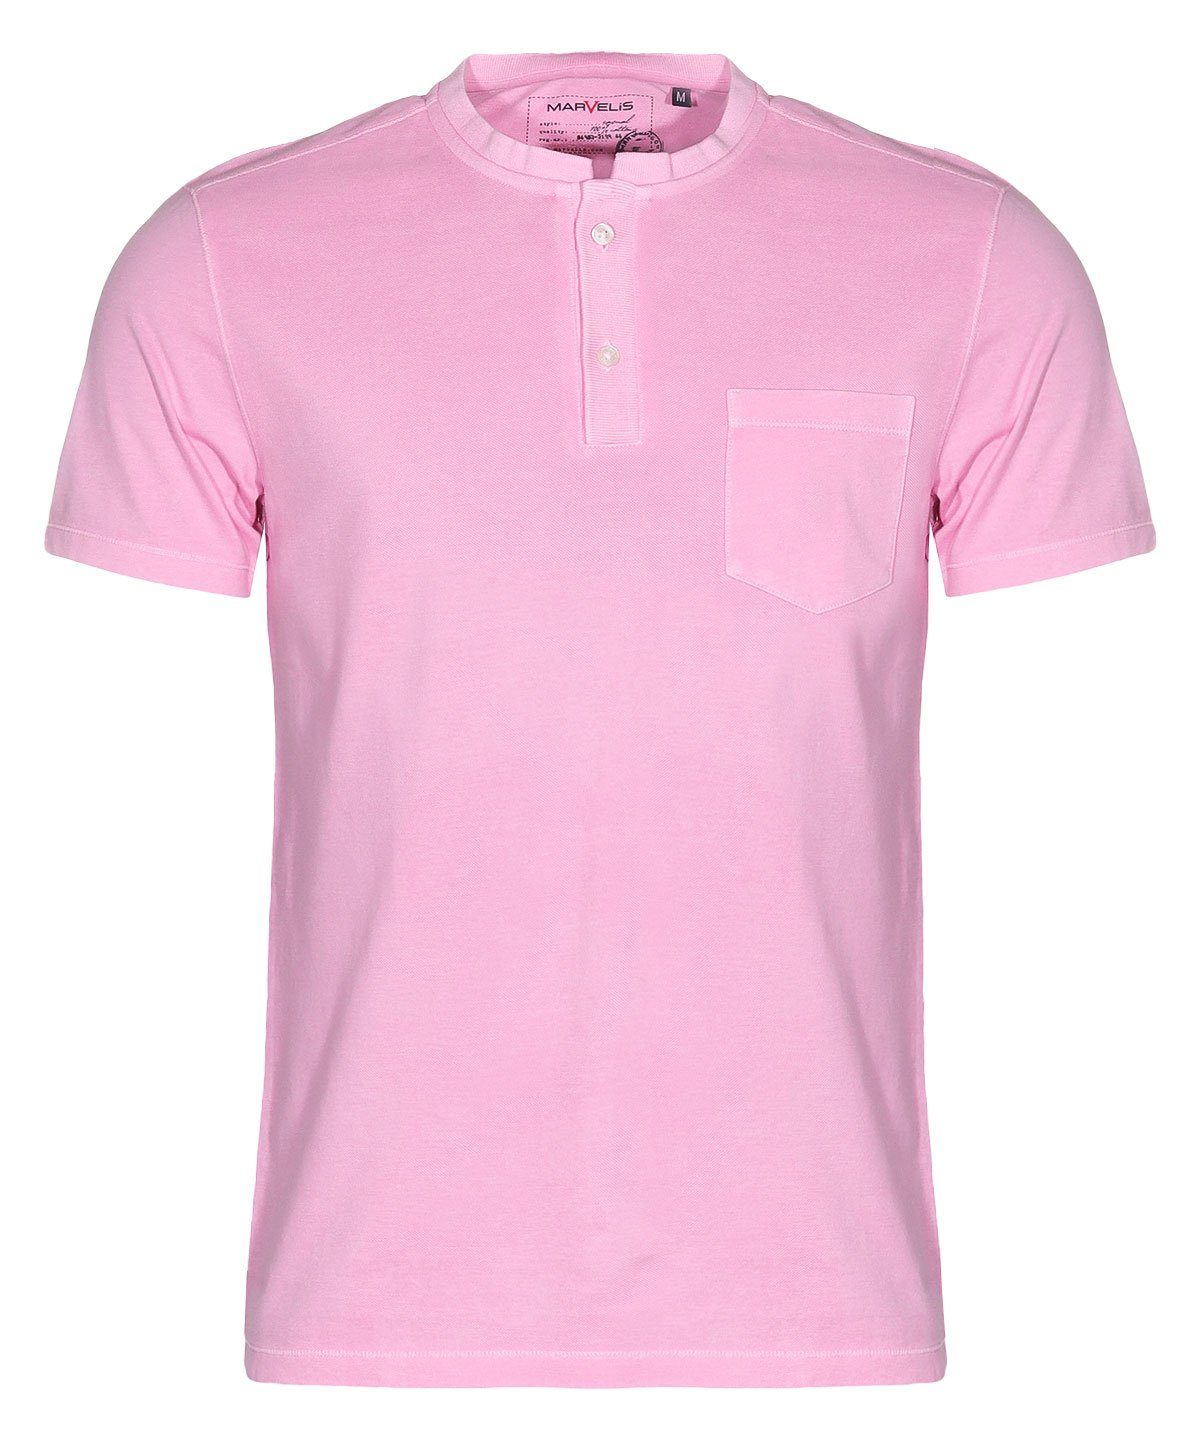 - - - Einfarbig Fit Rosa Poloshirt MARVELIS Poloshirt - Casual Stehkragen